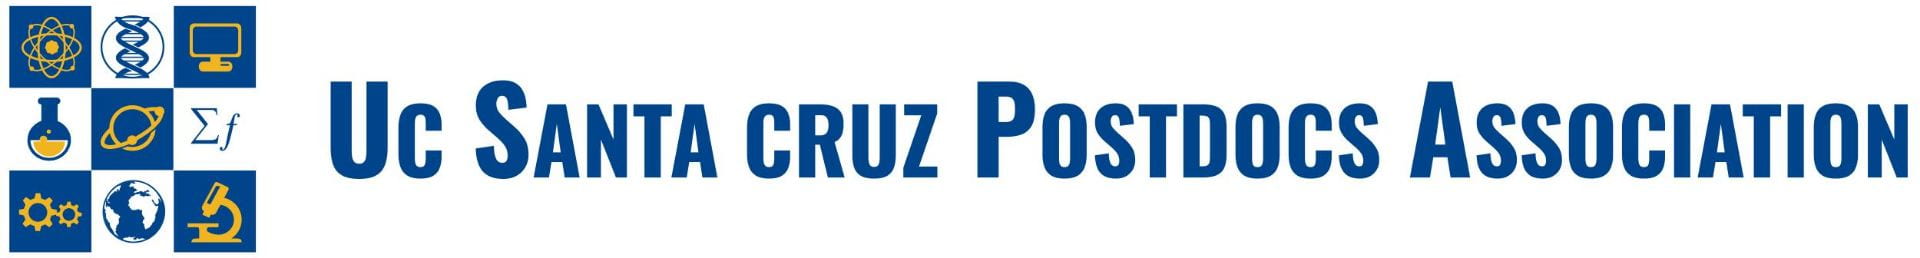 UC Santa Cruz Postdocs Association (USPA) Logo